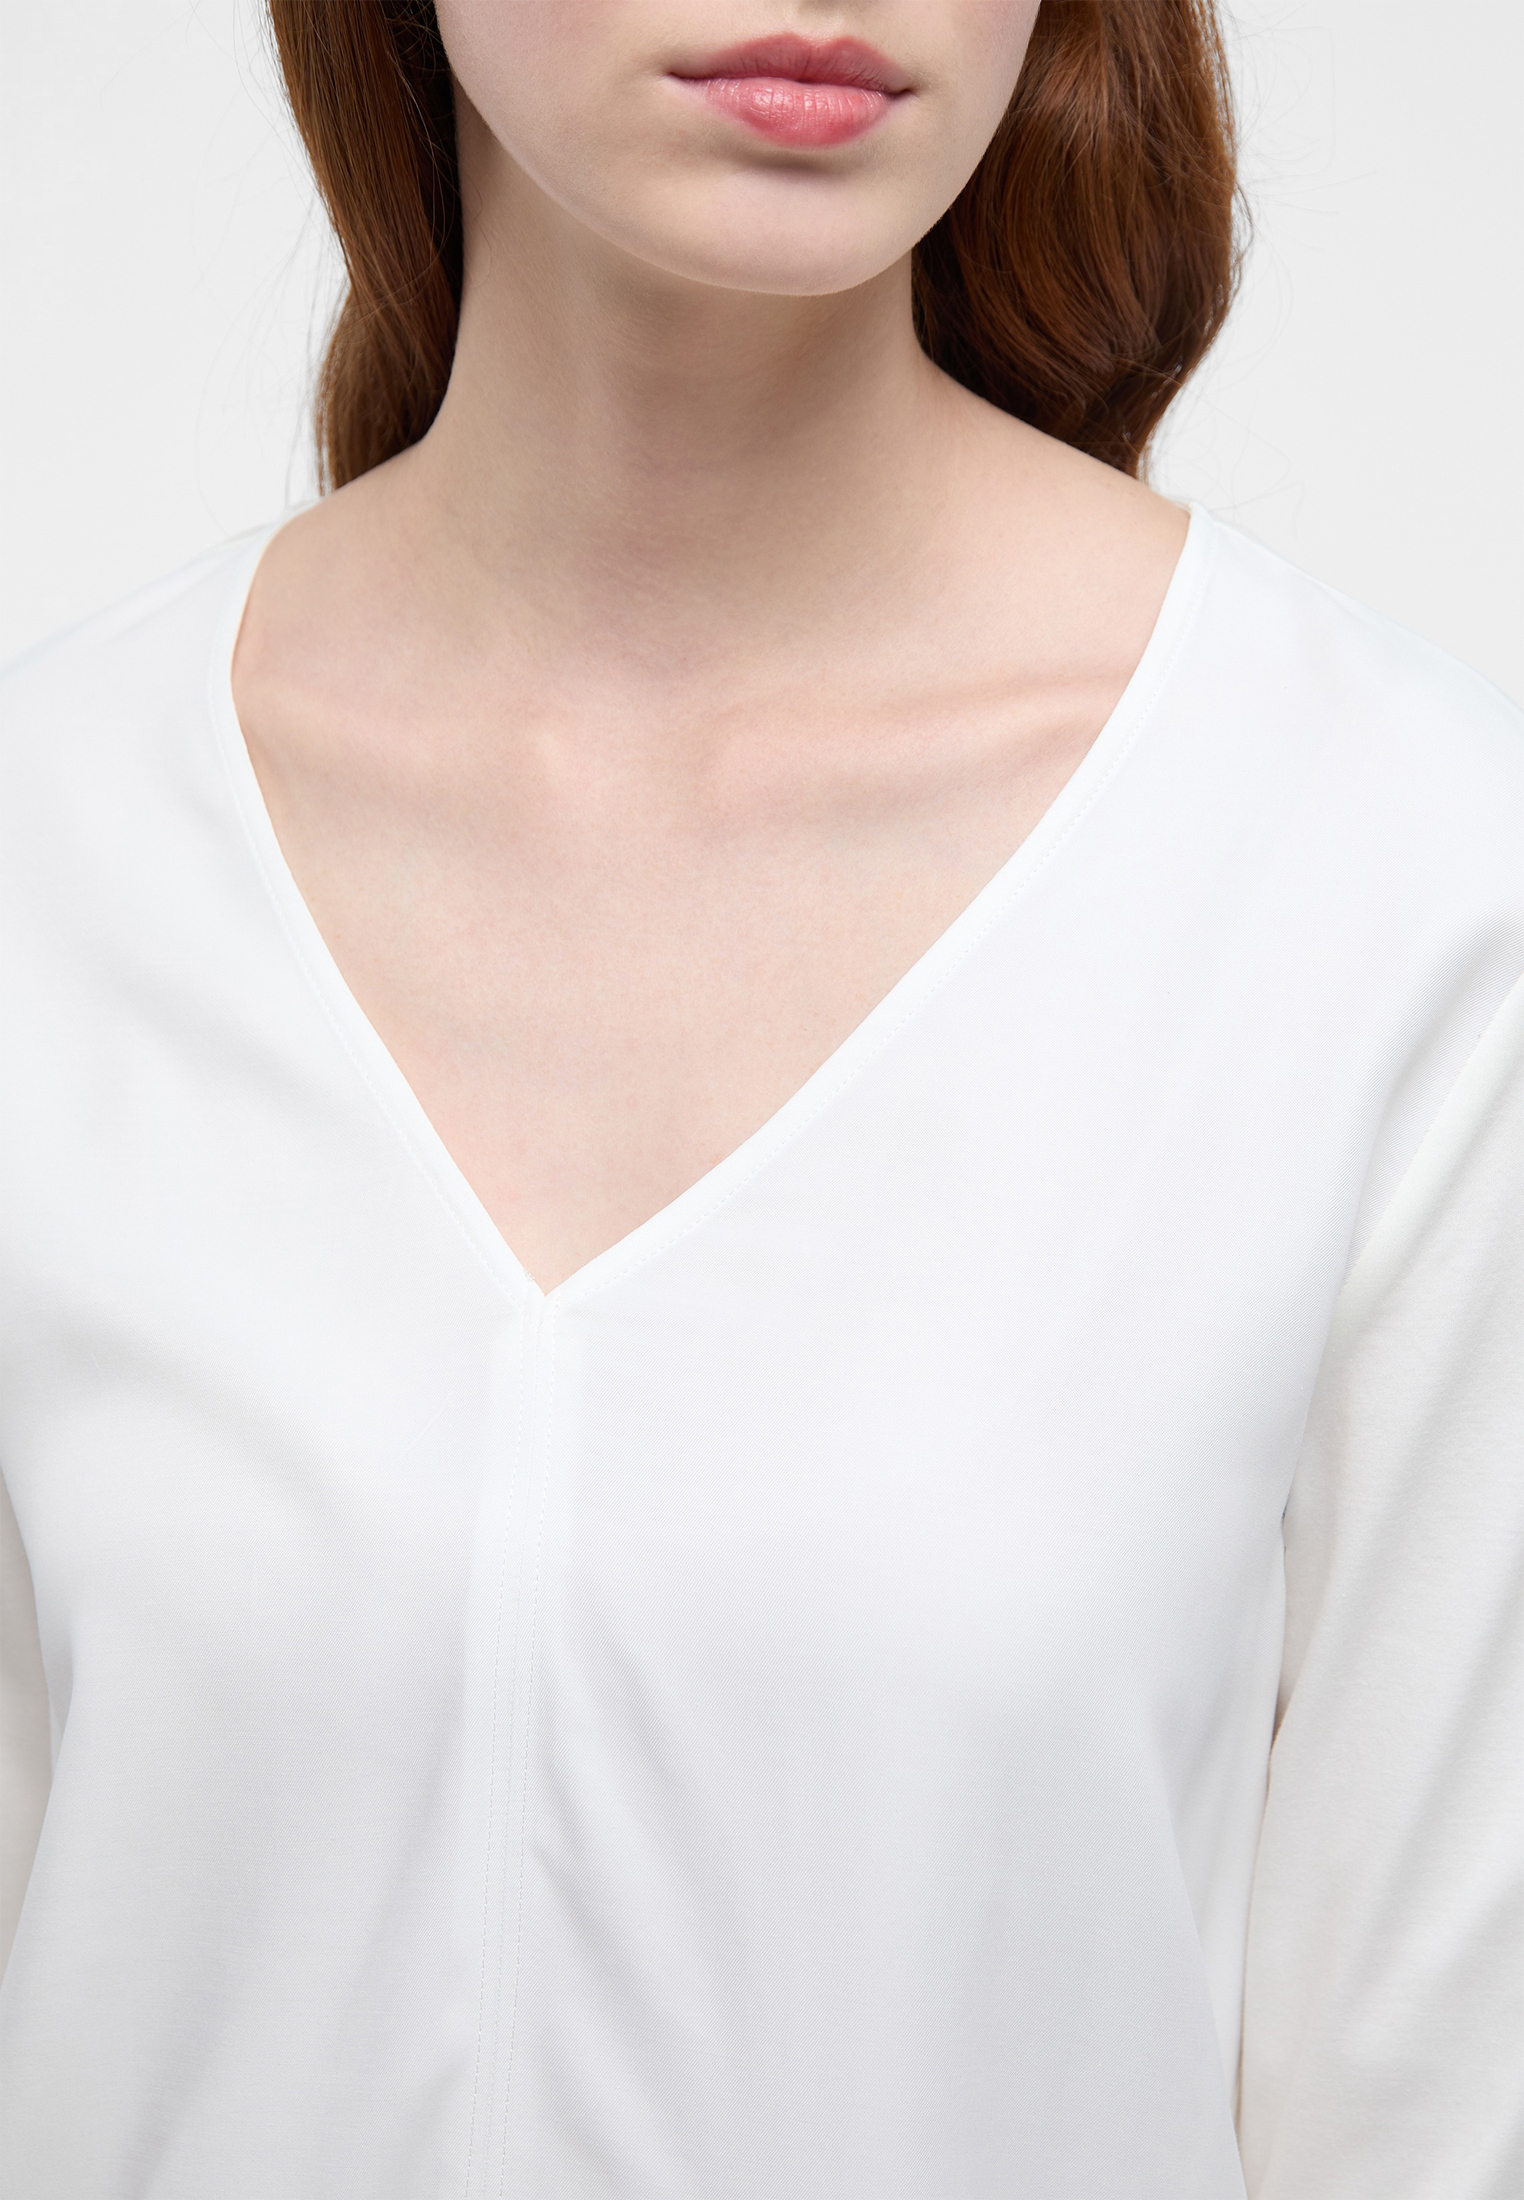 Viscose Shirt Bluse in off-white unifarben | off-white | 46 | Langarm |  2BL04252-00-02-46-1/1 | Blusenshirts